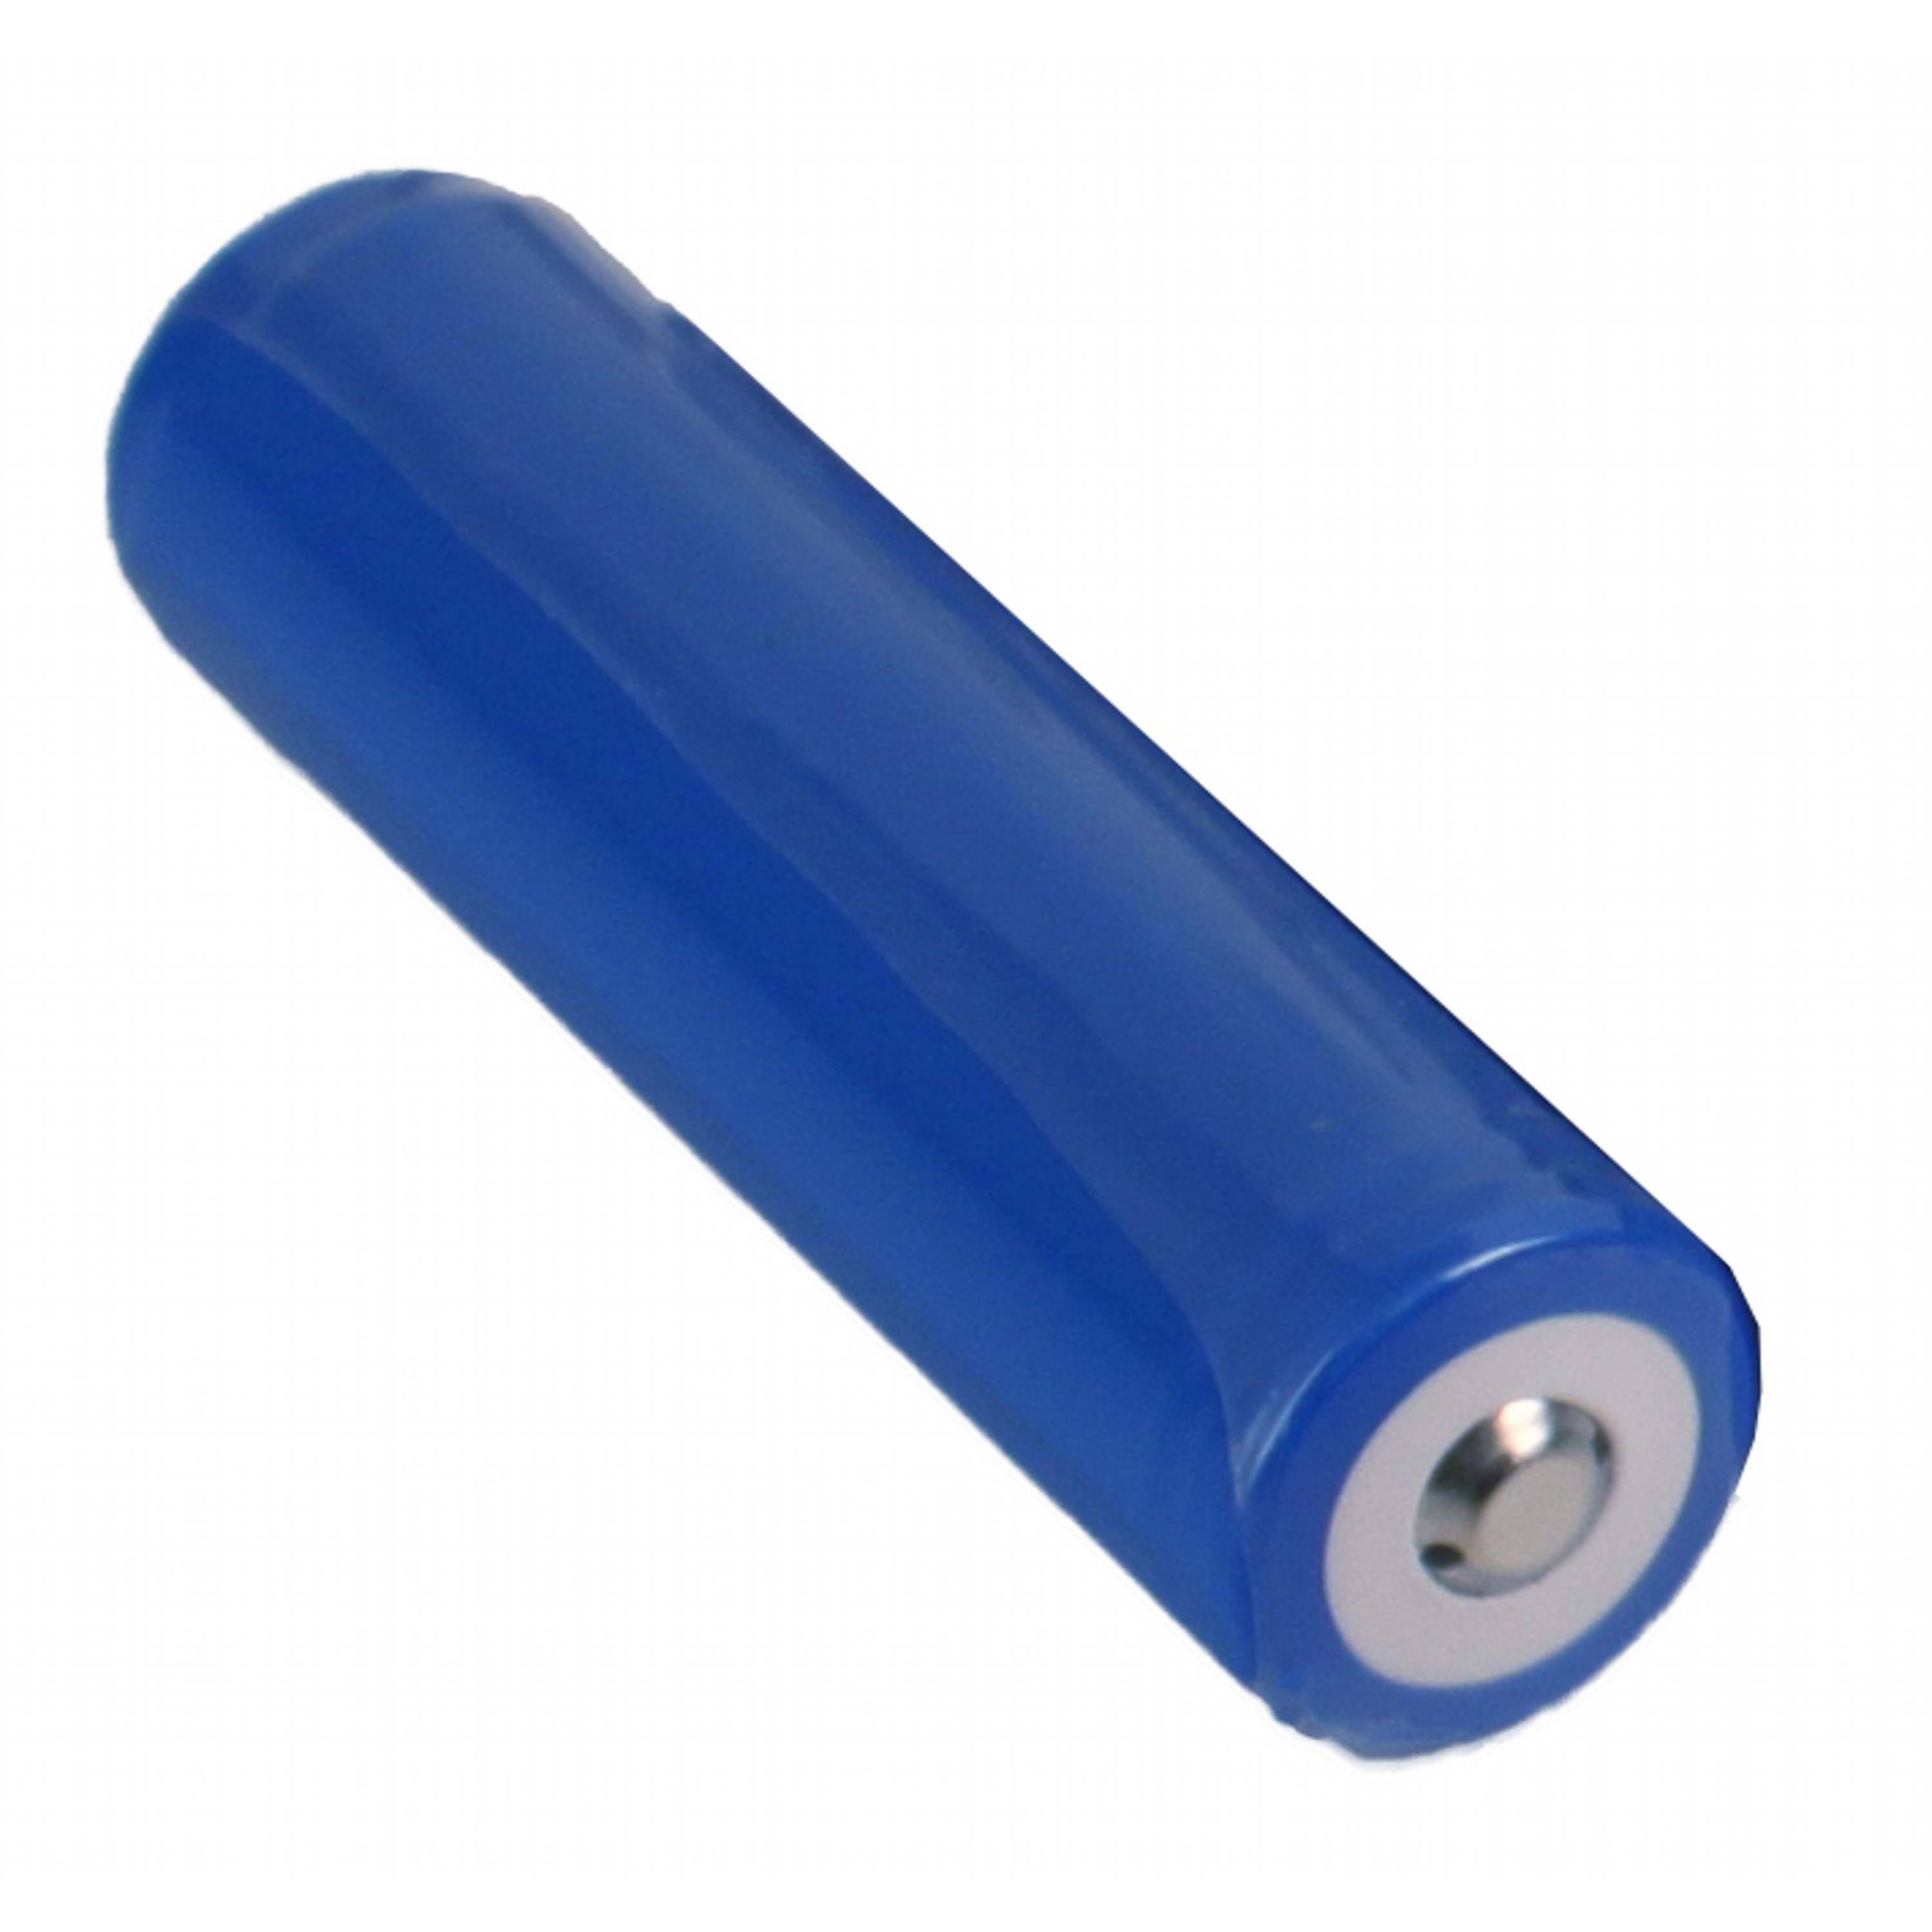 Li-ion Rechargeable Flashlight Battery